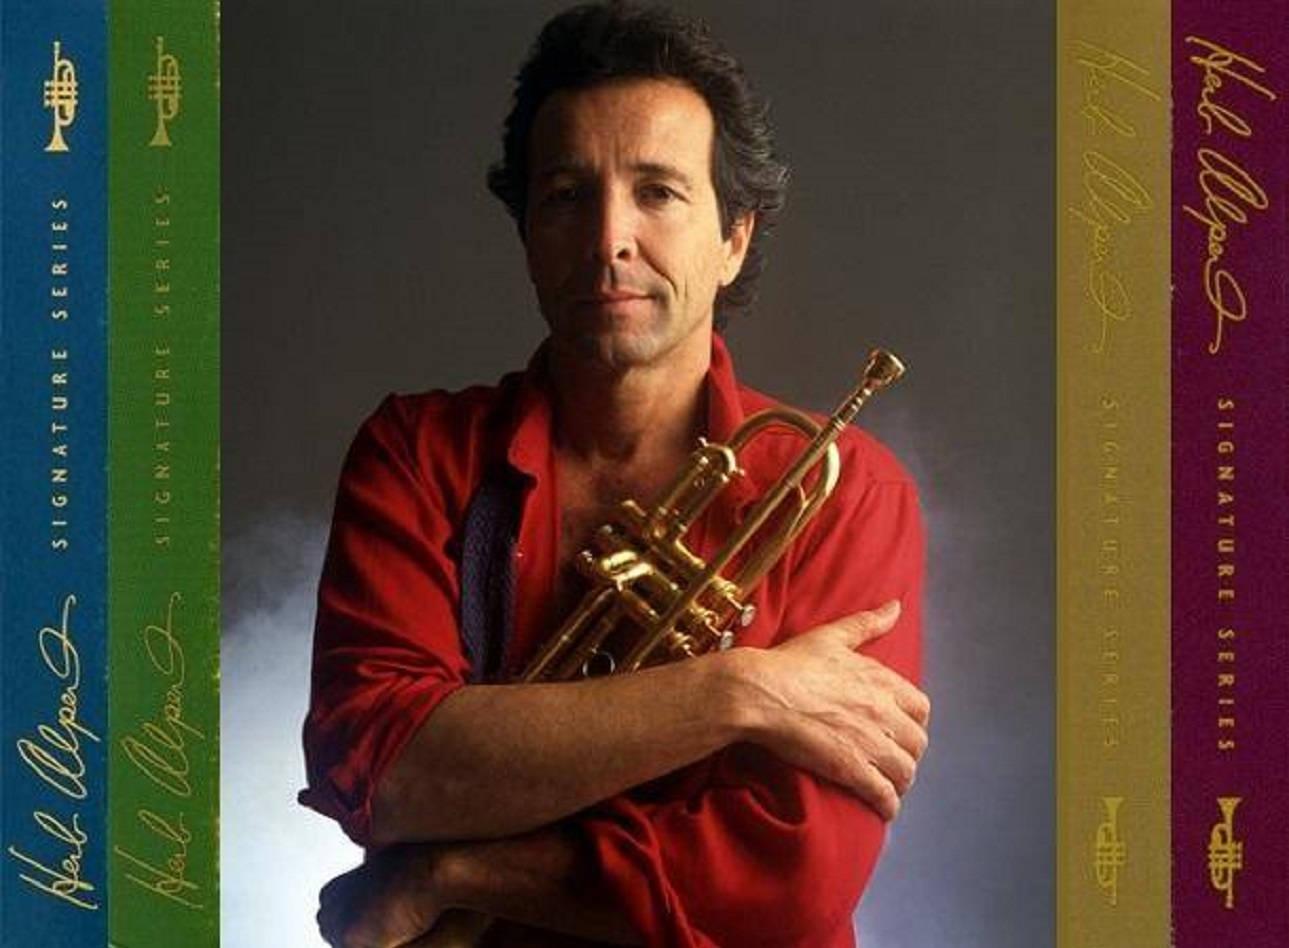 Download Herb Alpert And The Tijuana Brass Trumpeter Herb